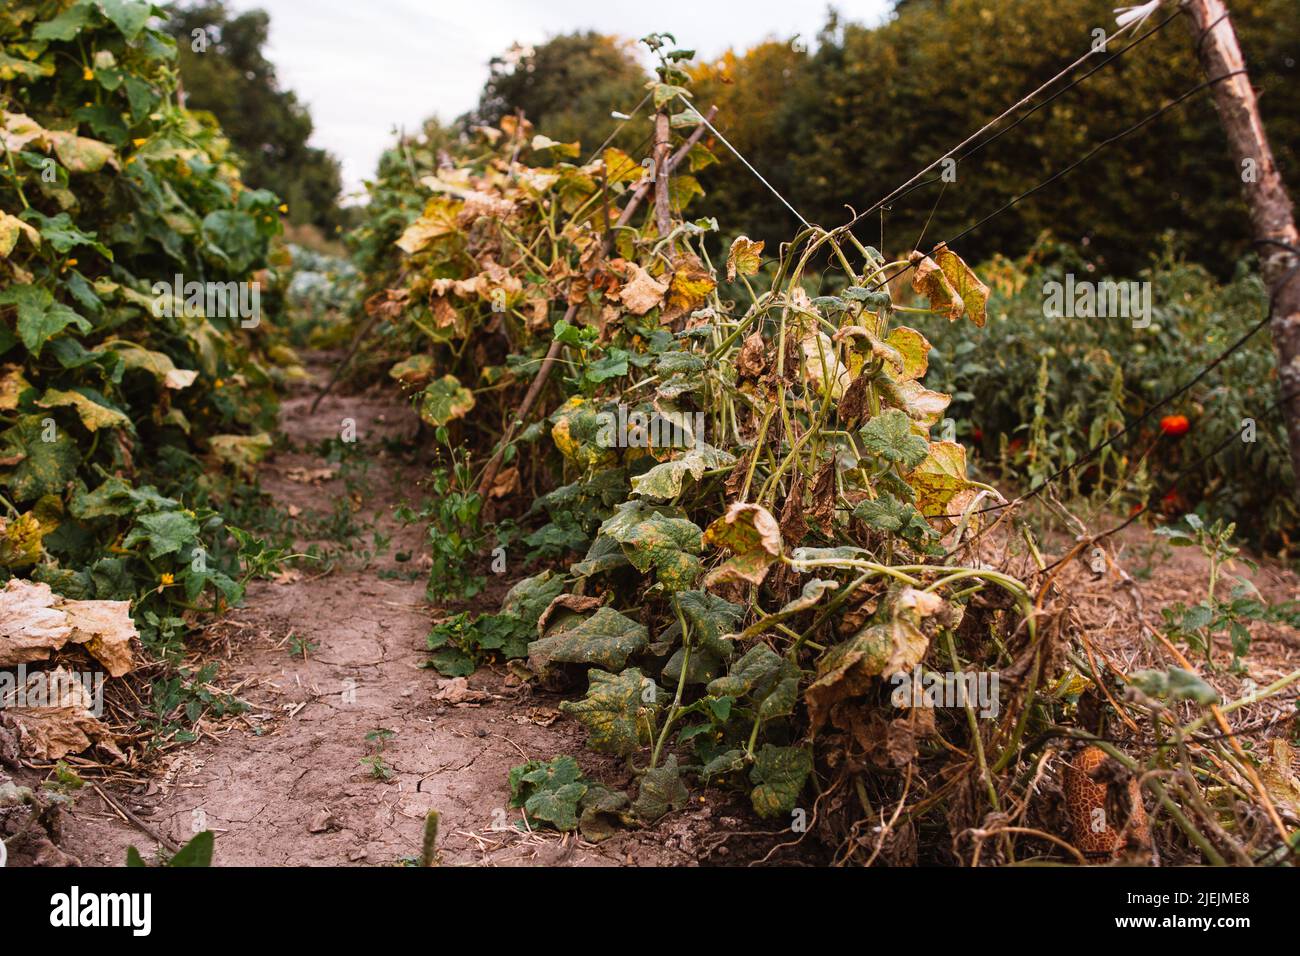 Natural farming downshifting organic cucumber plants Stock Photo